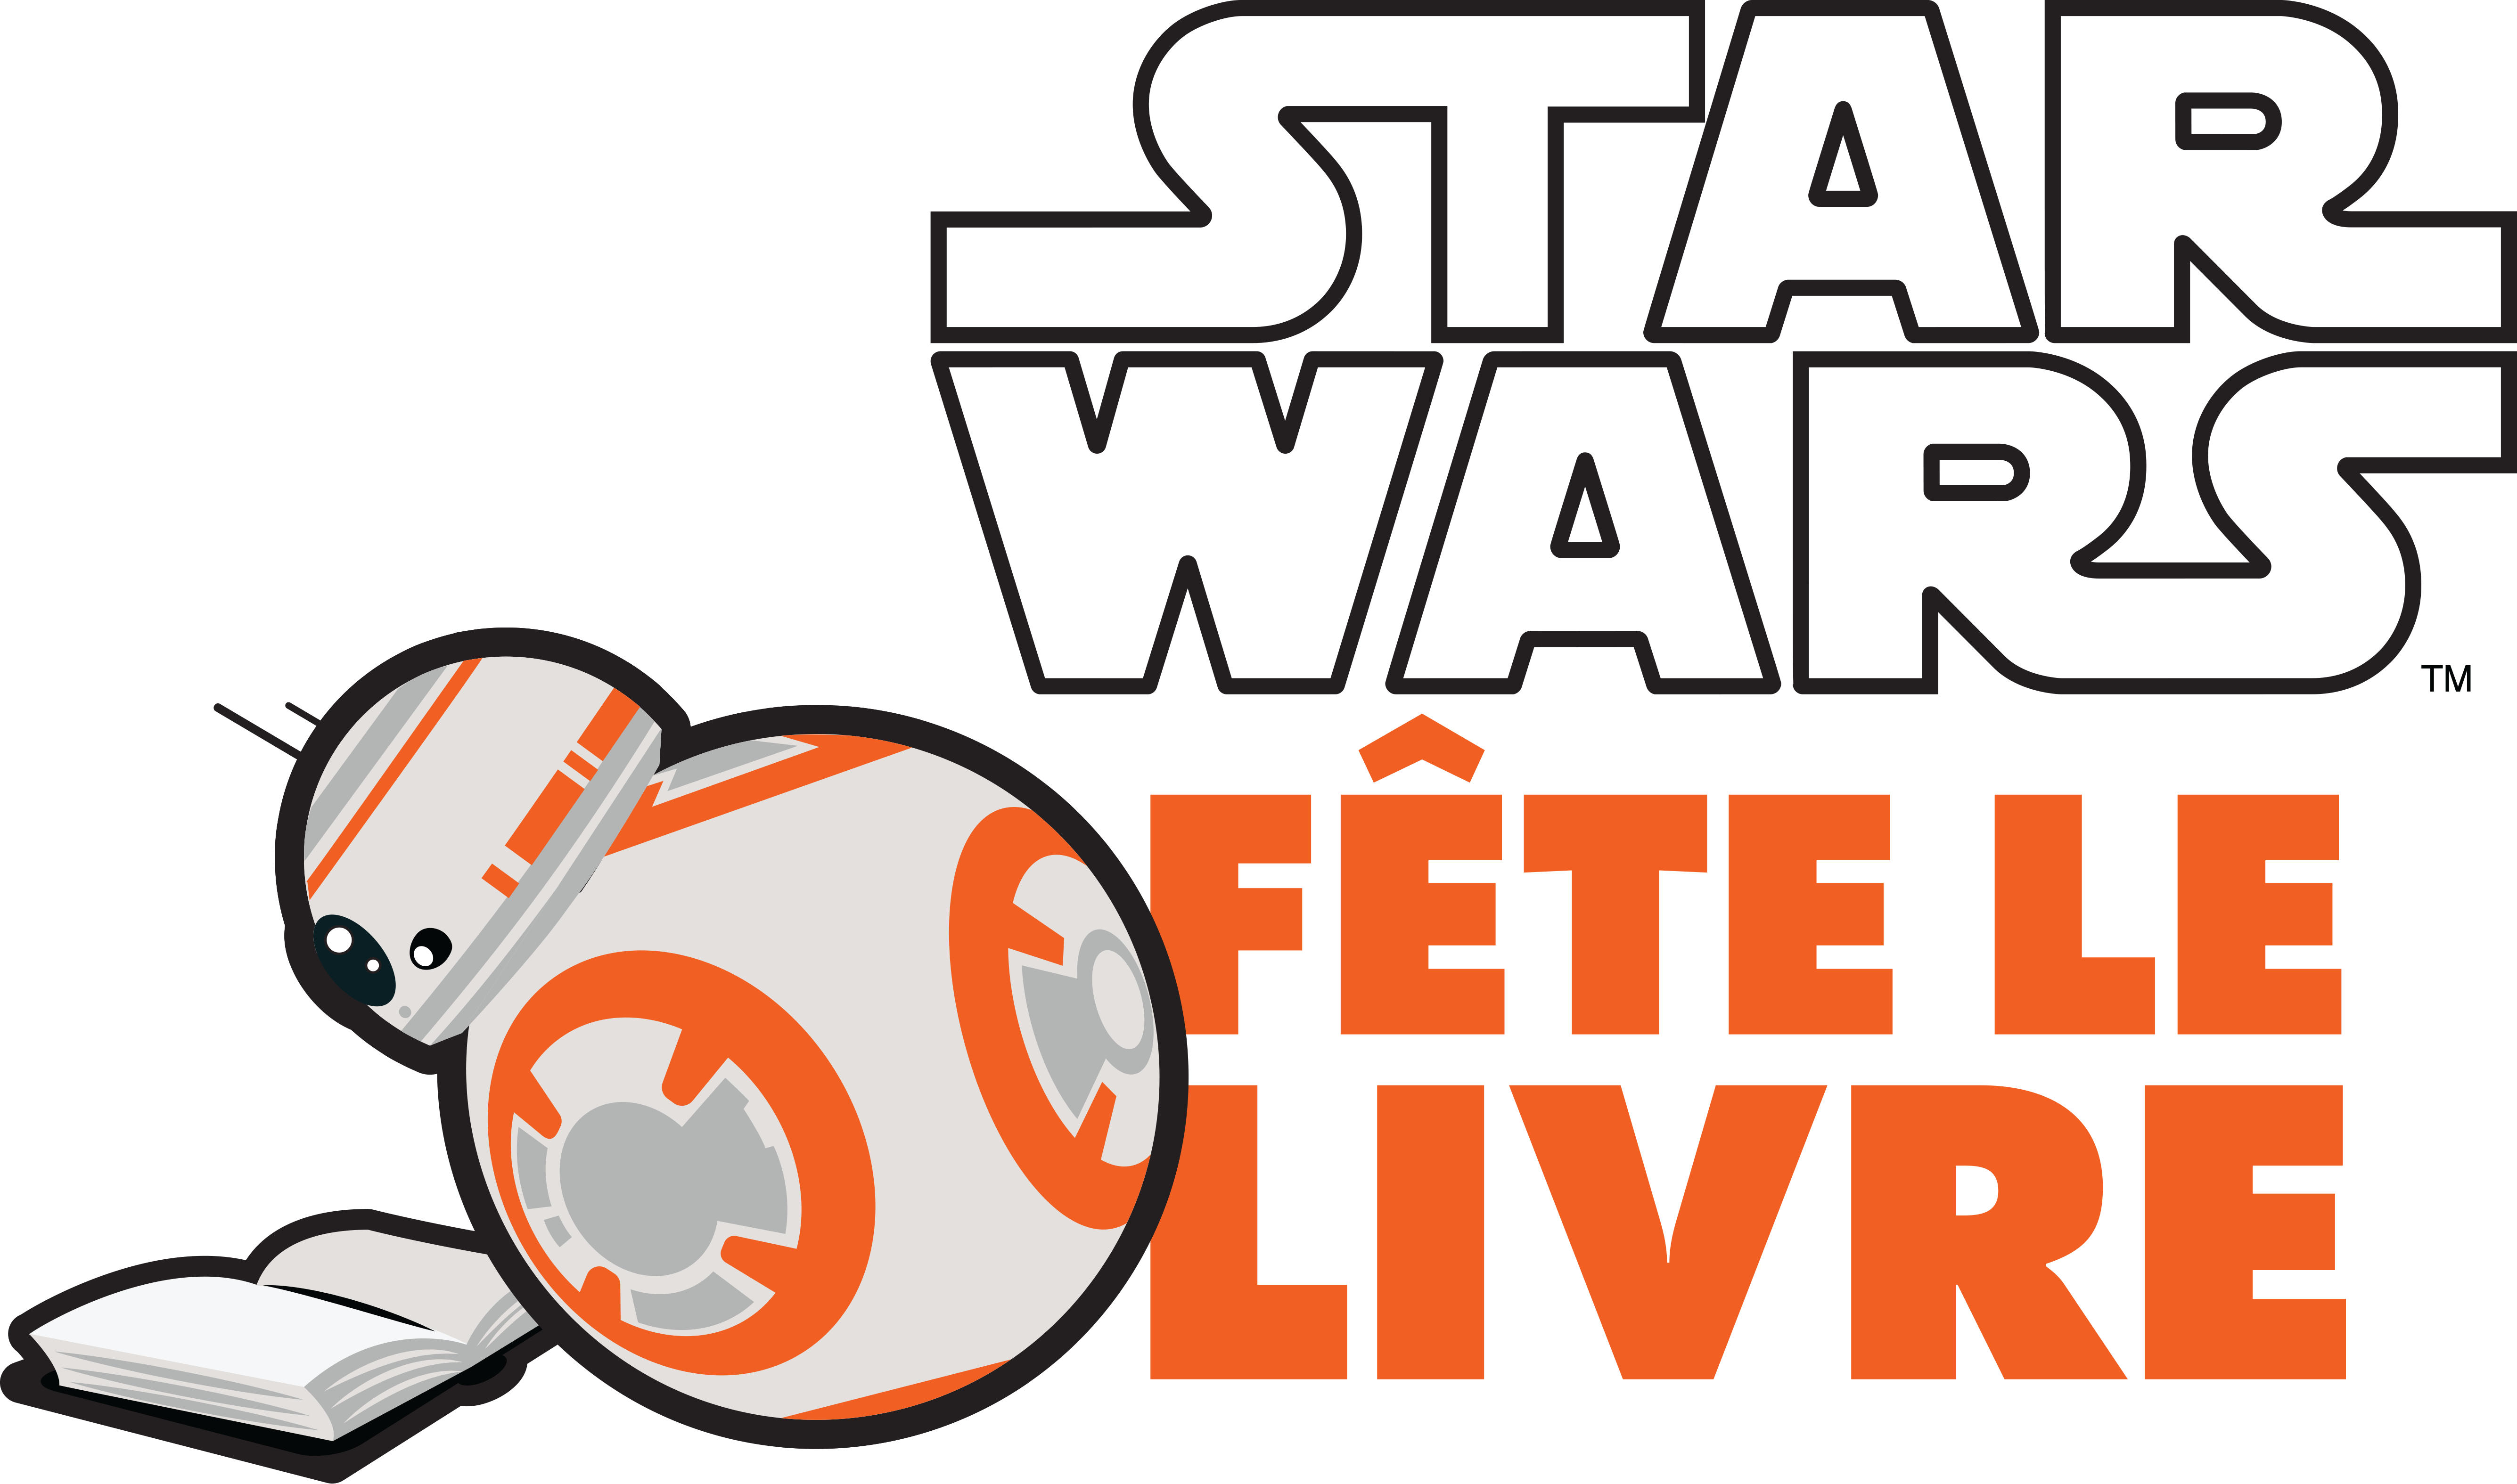 Logo Star Wars Fete - Star Wars Reads Day (5341x3150)